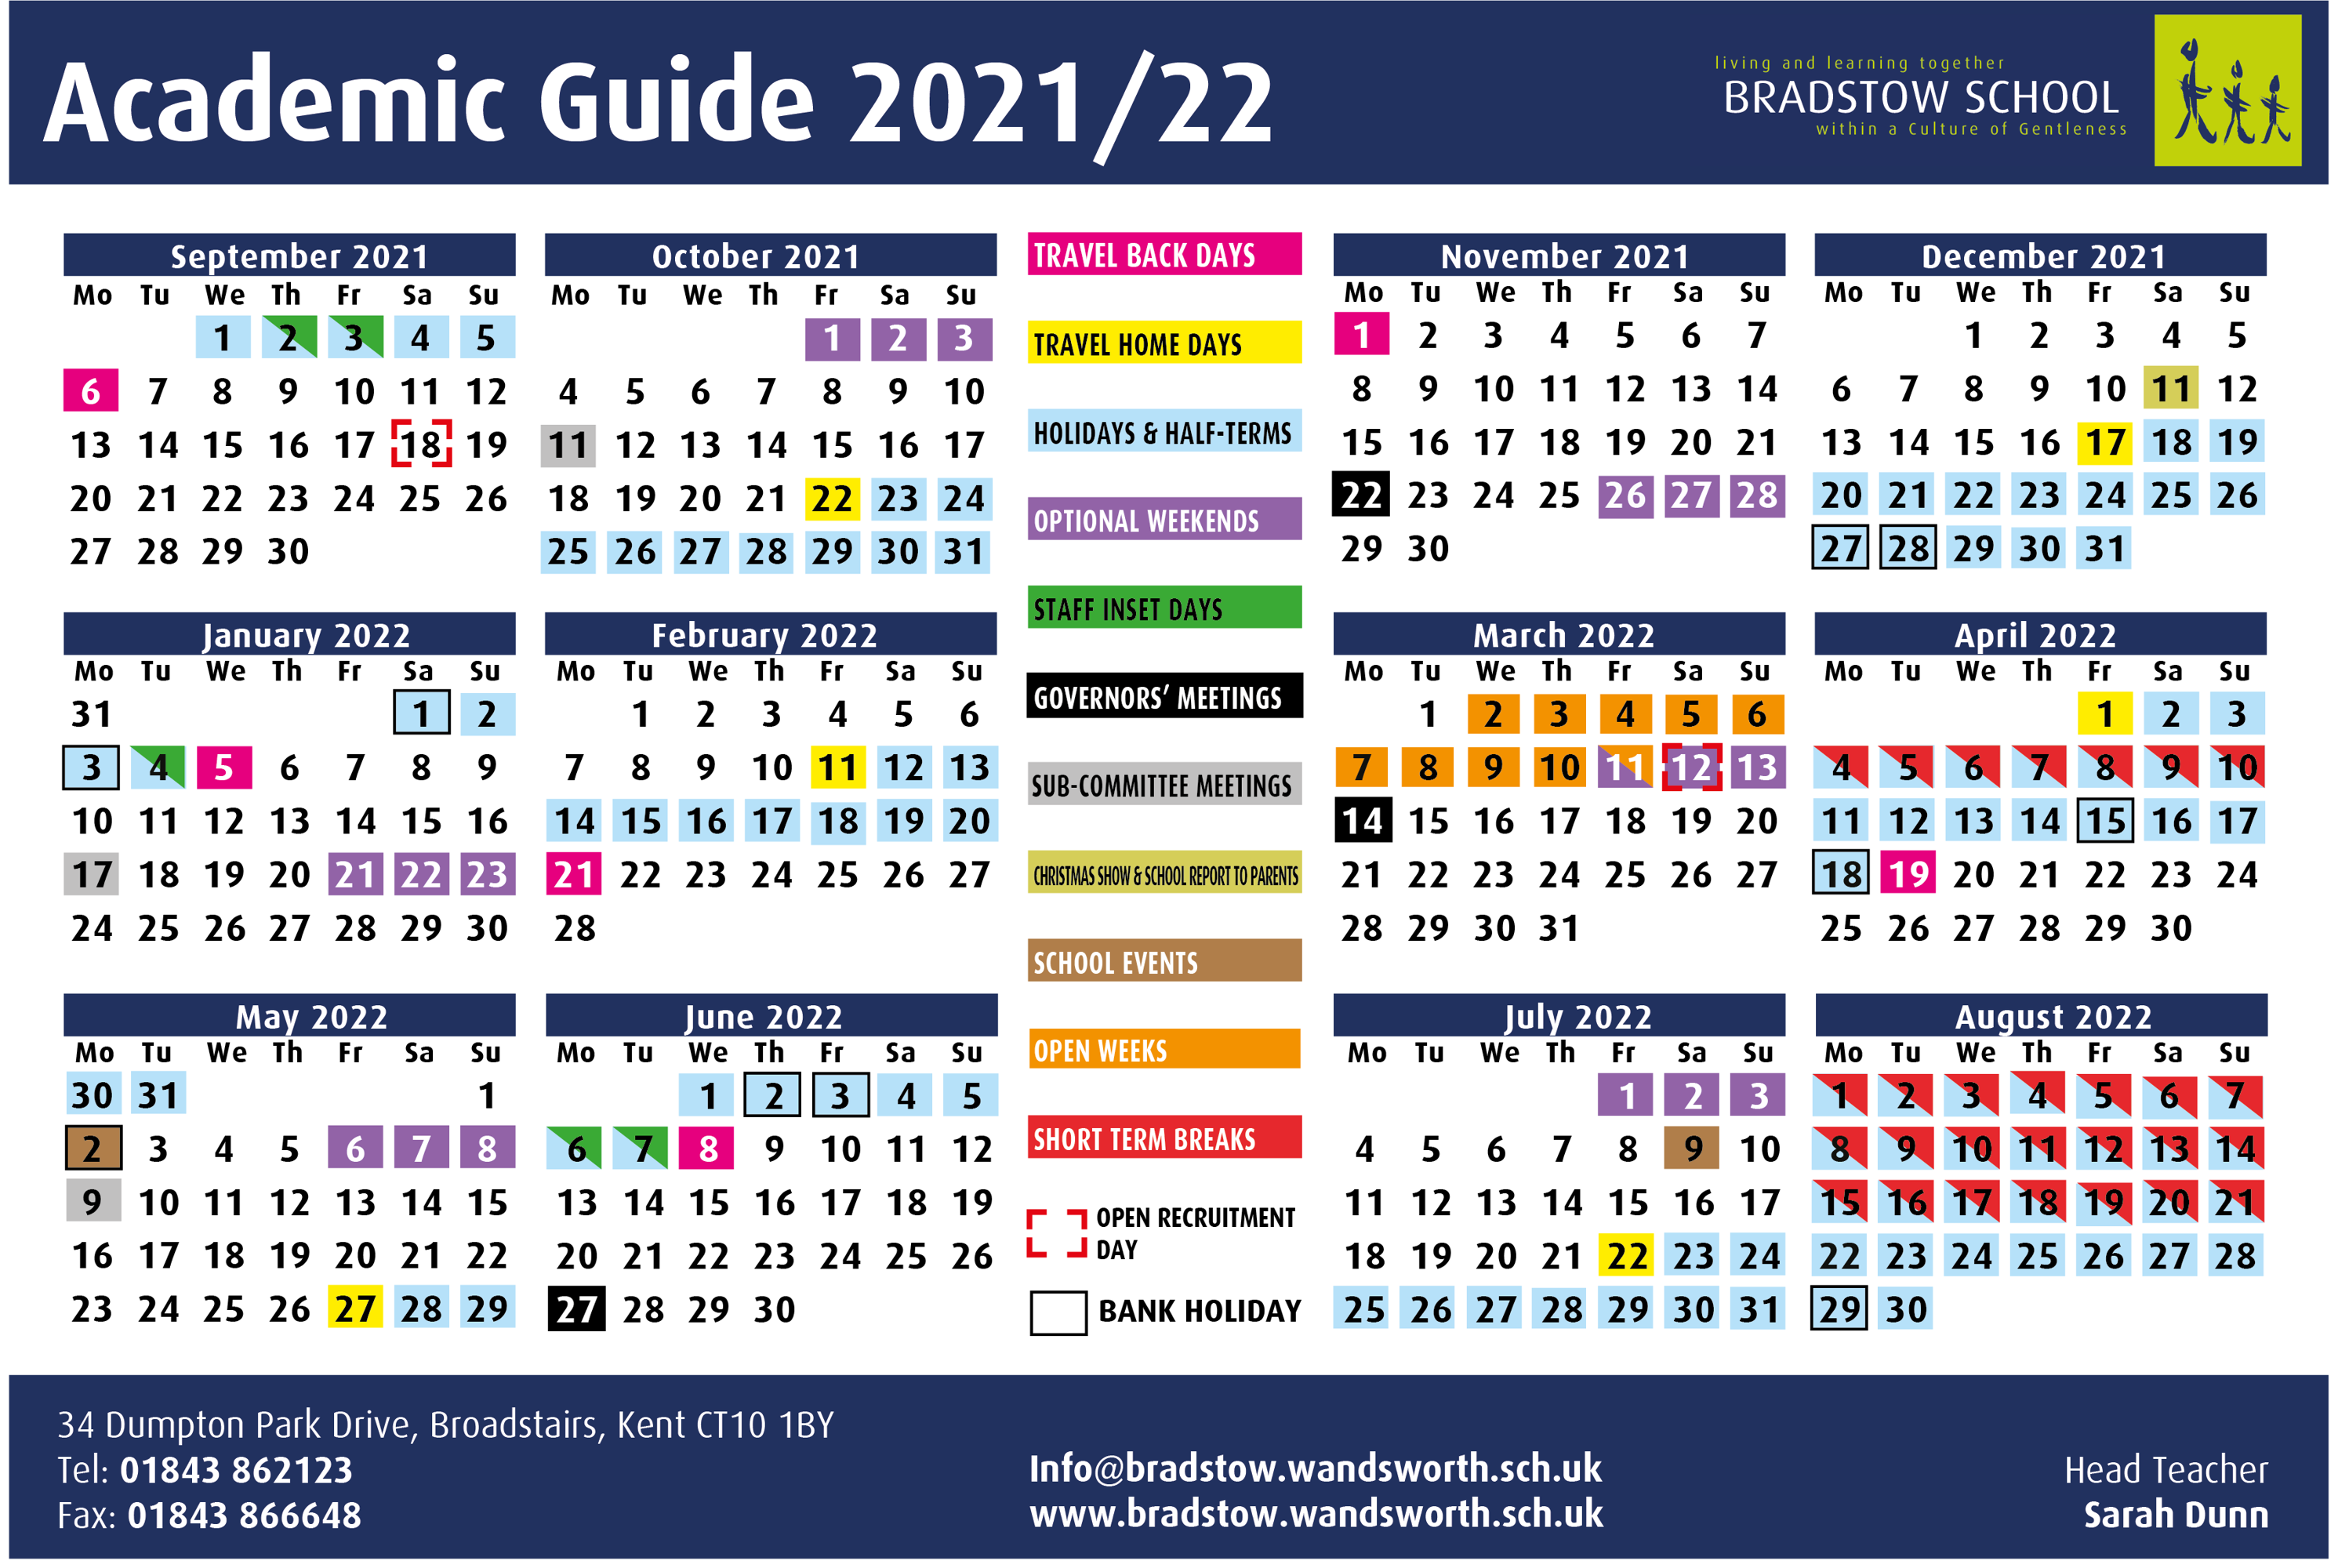 Calendar layout 2021 22 updated 12nov2021